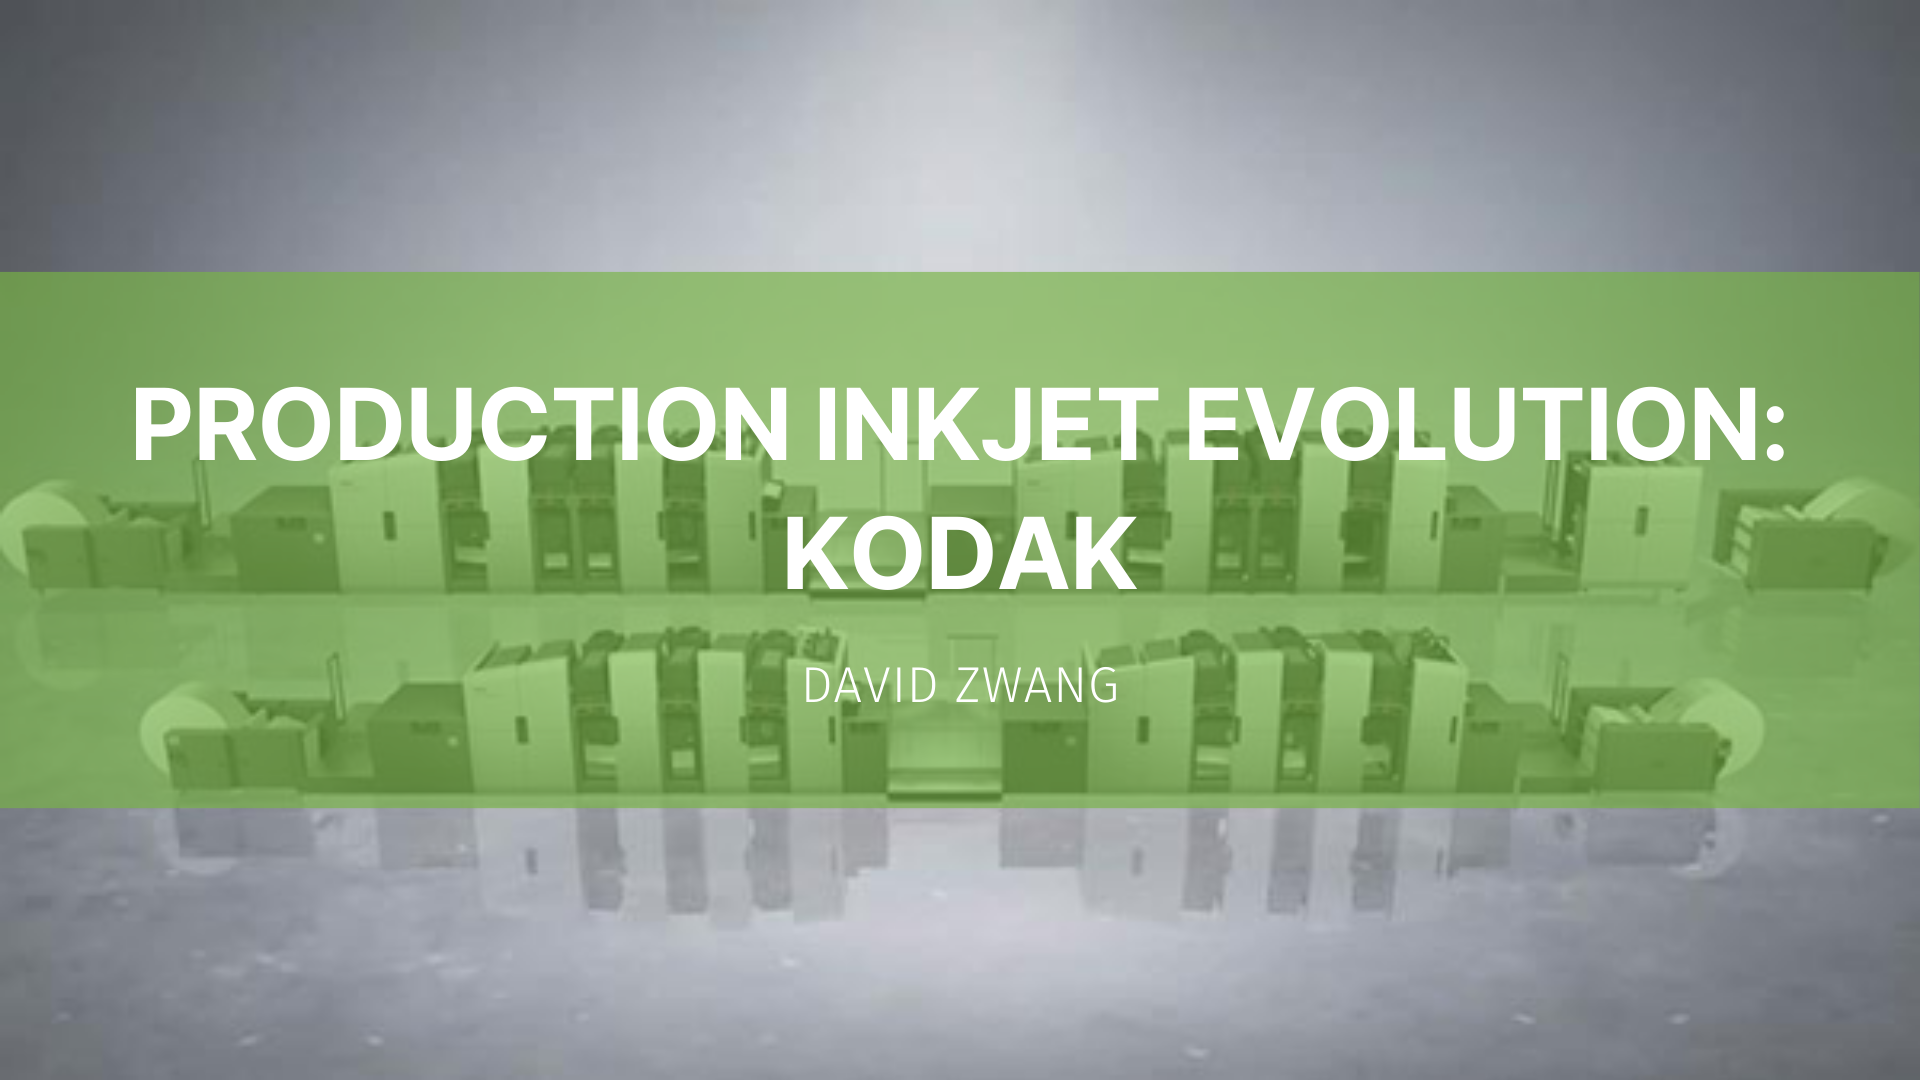 Featured image for “Production Inkjet Evolution: Kodak”